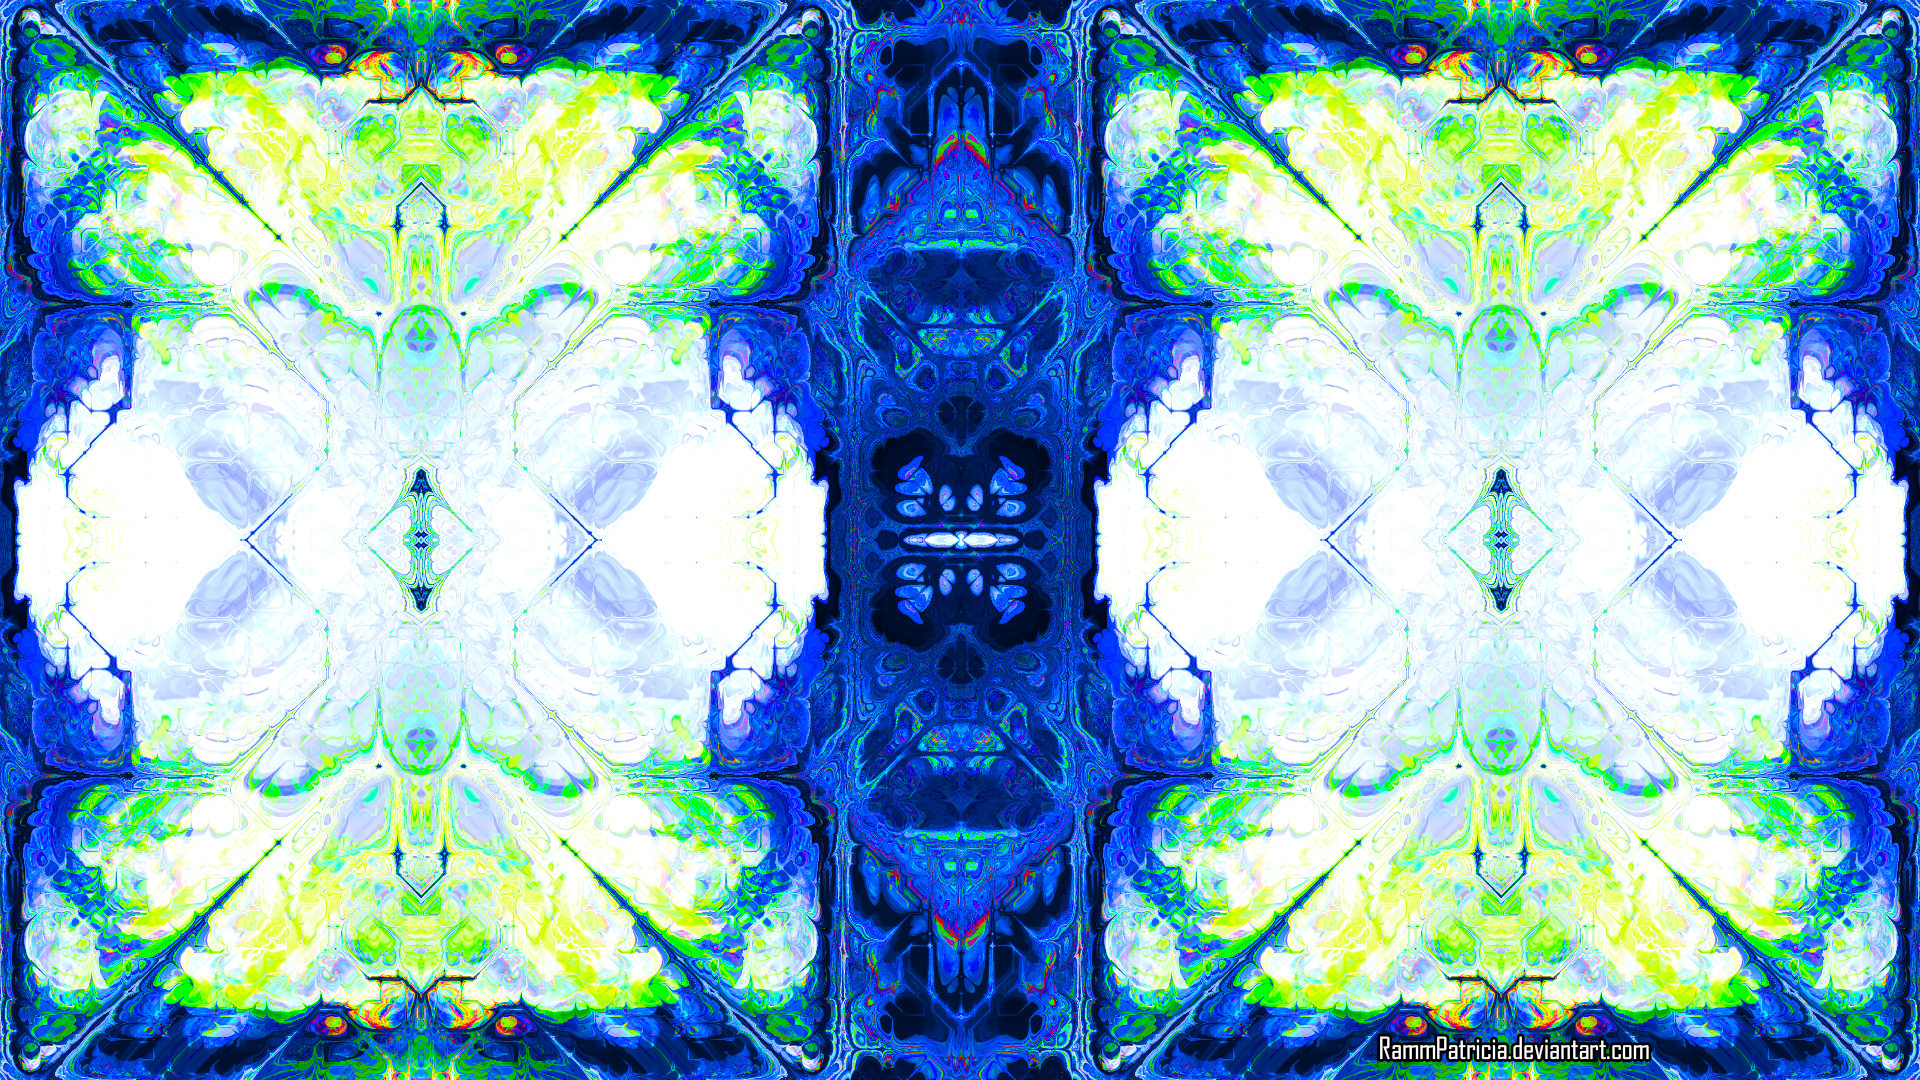 RammPatricia Digital Abstract Digital Art Science Fiction Watermarked Symmetry Kaleidoscope Technolo 1920x1080